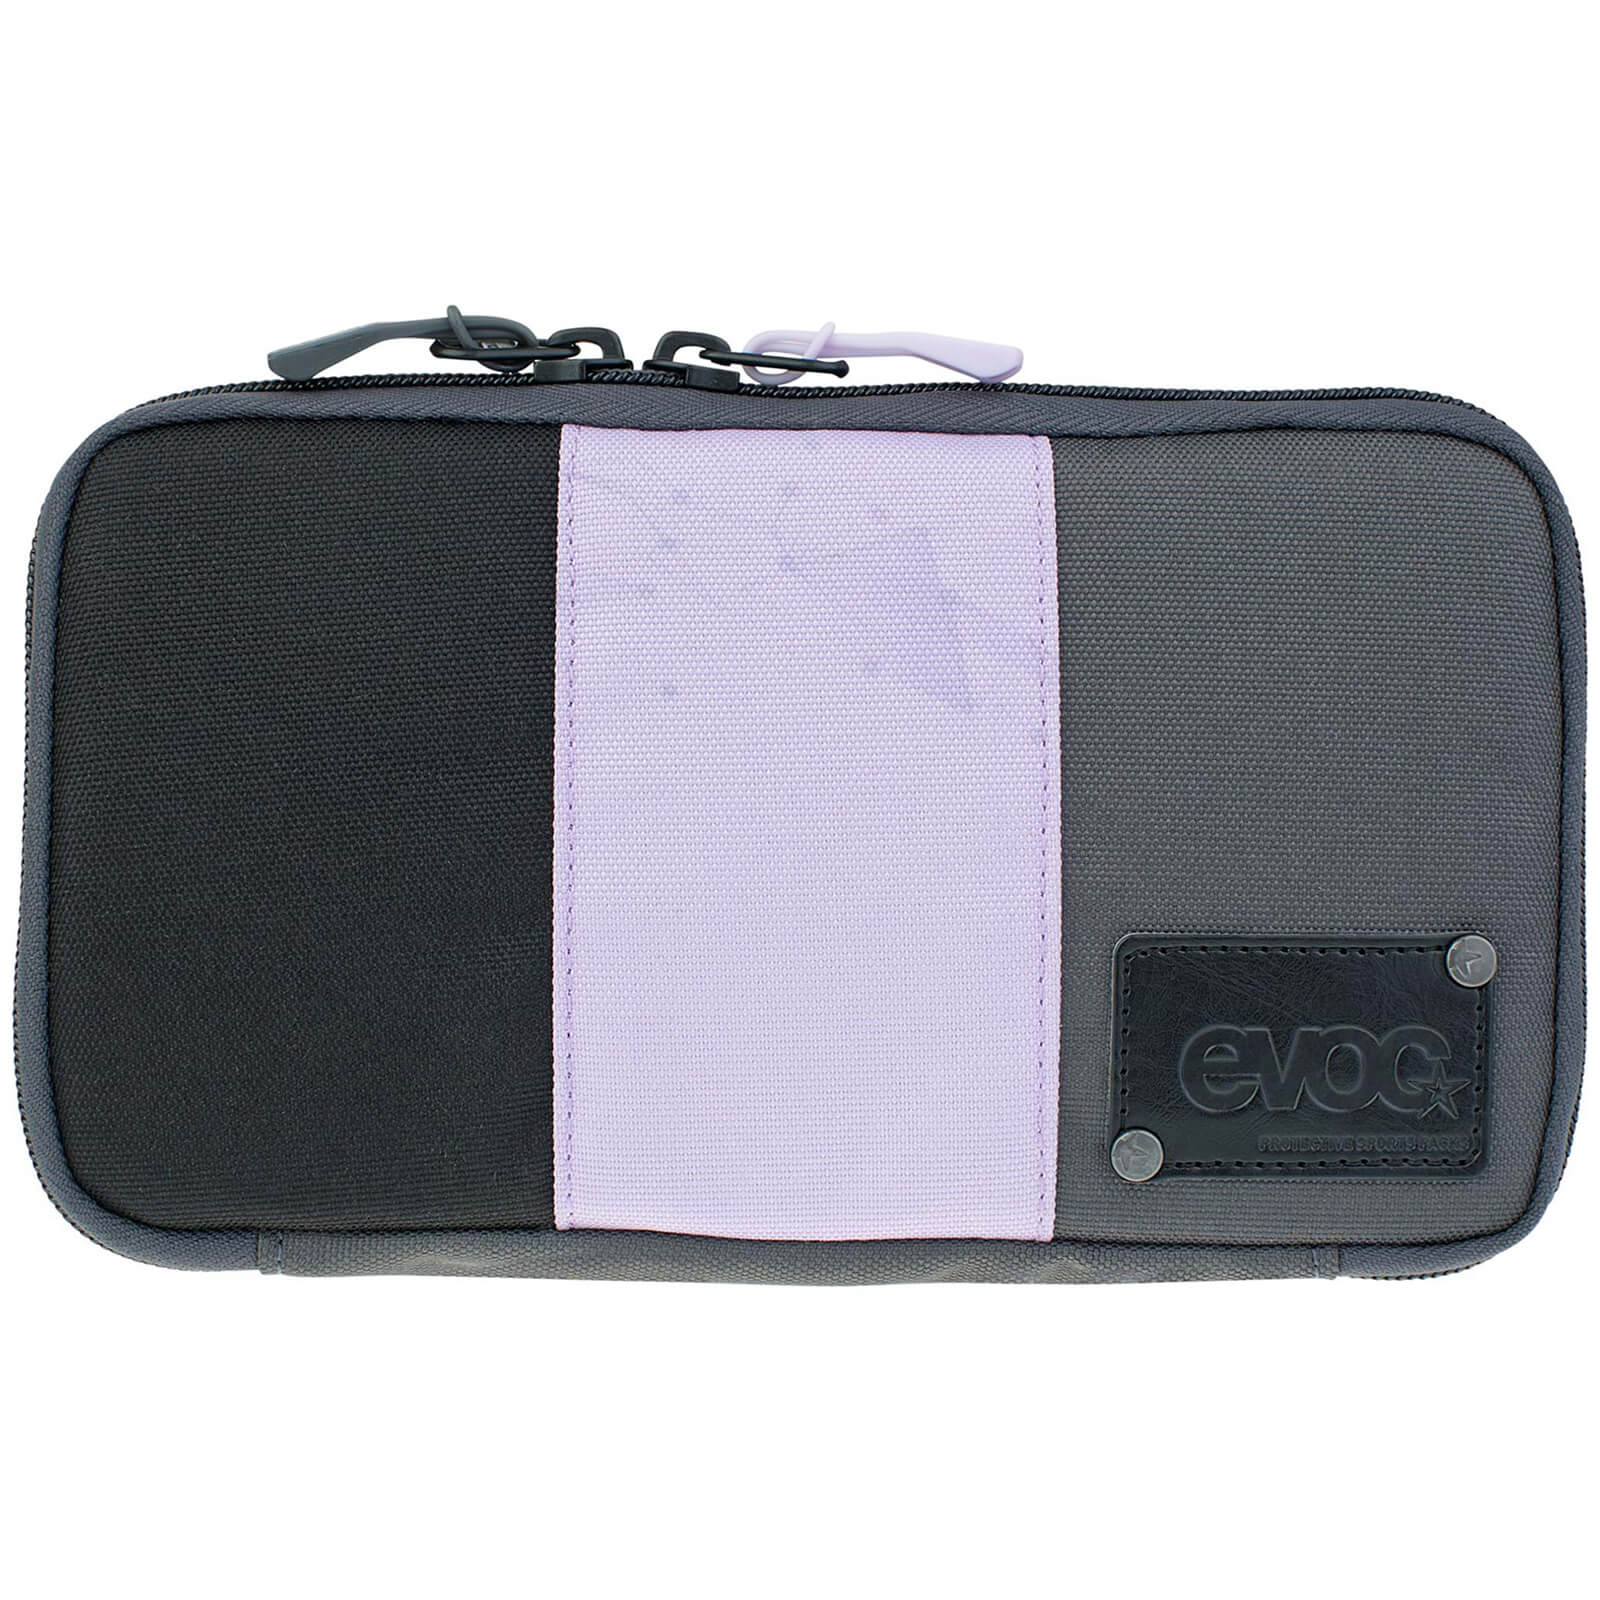 Evoc 5L Travel Case - Carbon Grey/Purple Rose/Black